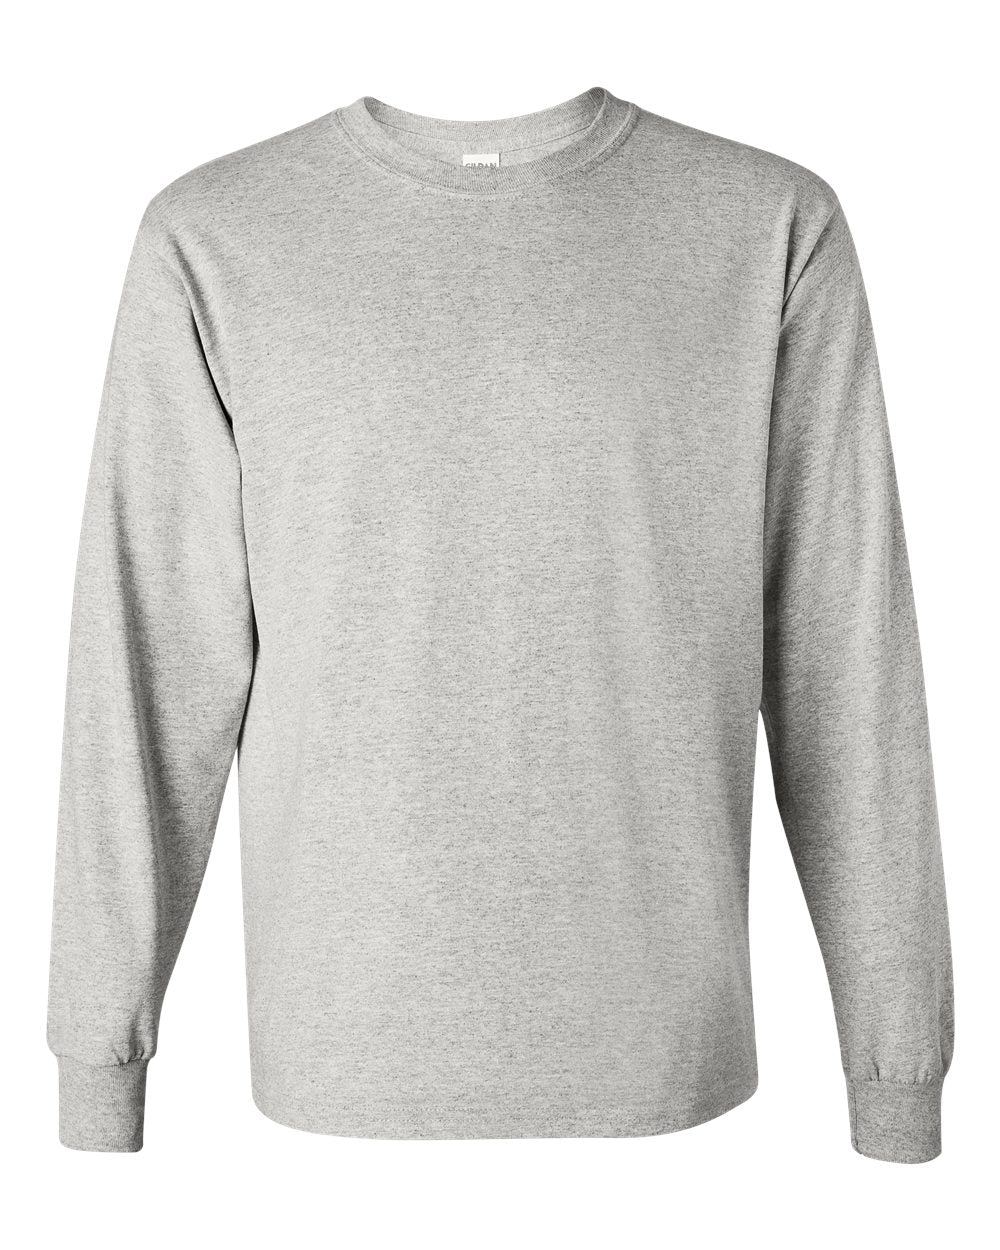 Pretreated Gildan 5400 Heavy Cotton Long Sleeve T-Shirt - Ash